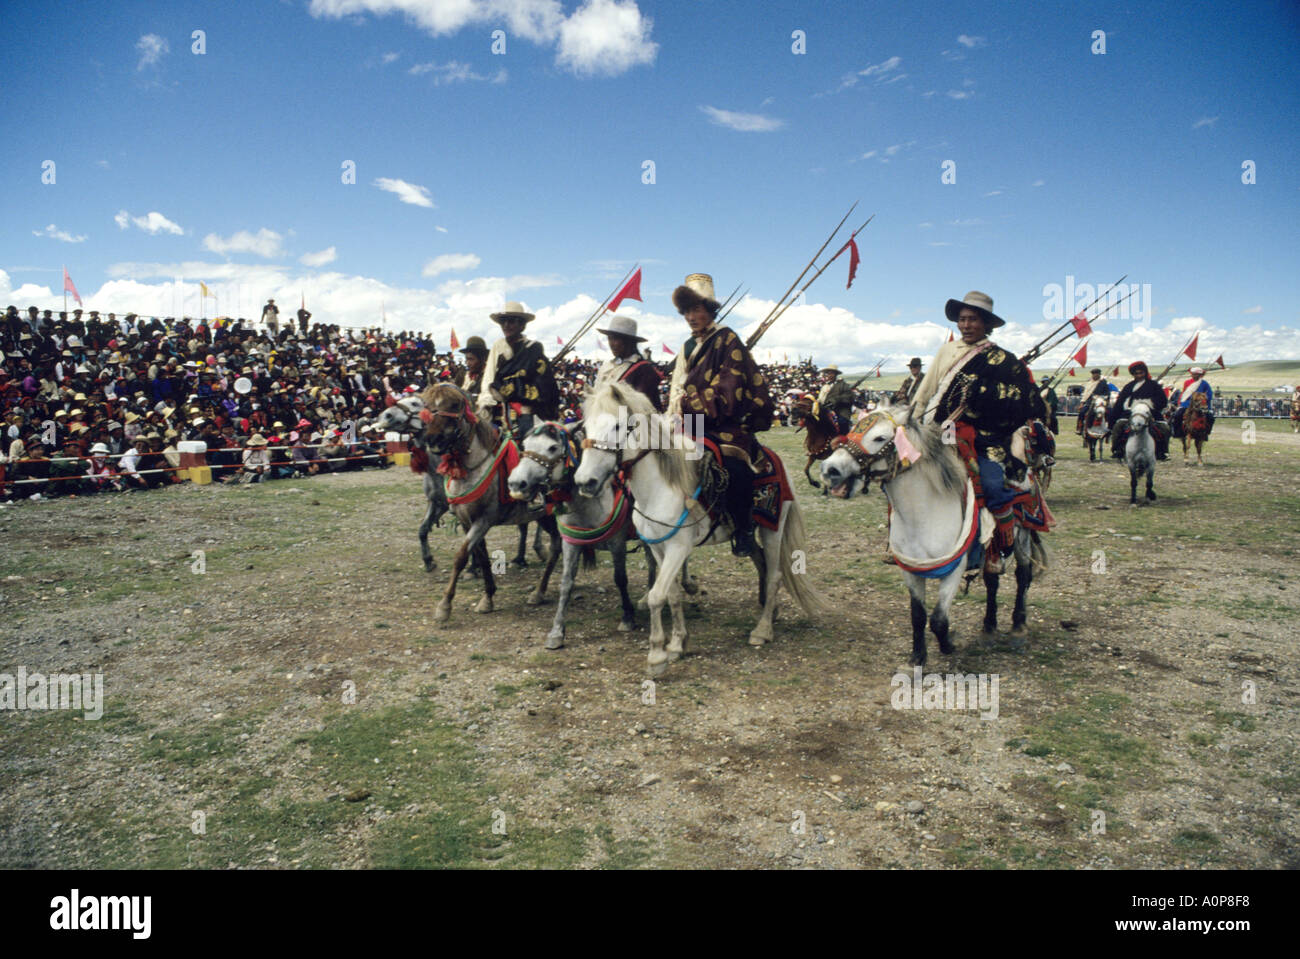 Cavalieri sfilano i loro cavalli al Naqu Fiera Cavalli in Tibet Foto Stock